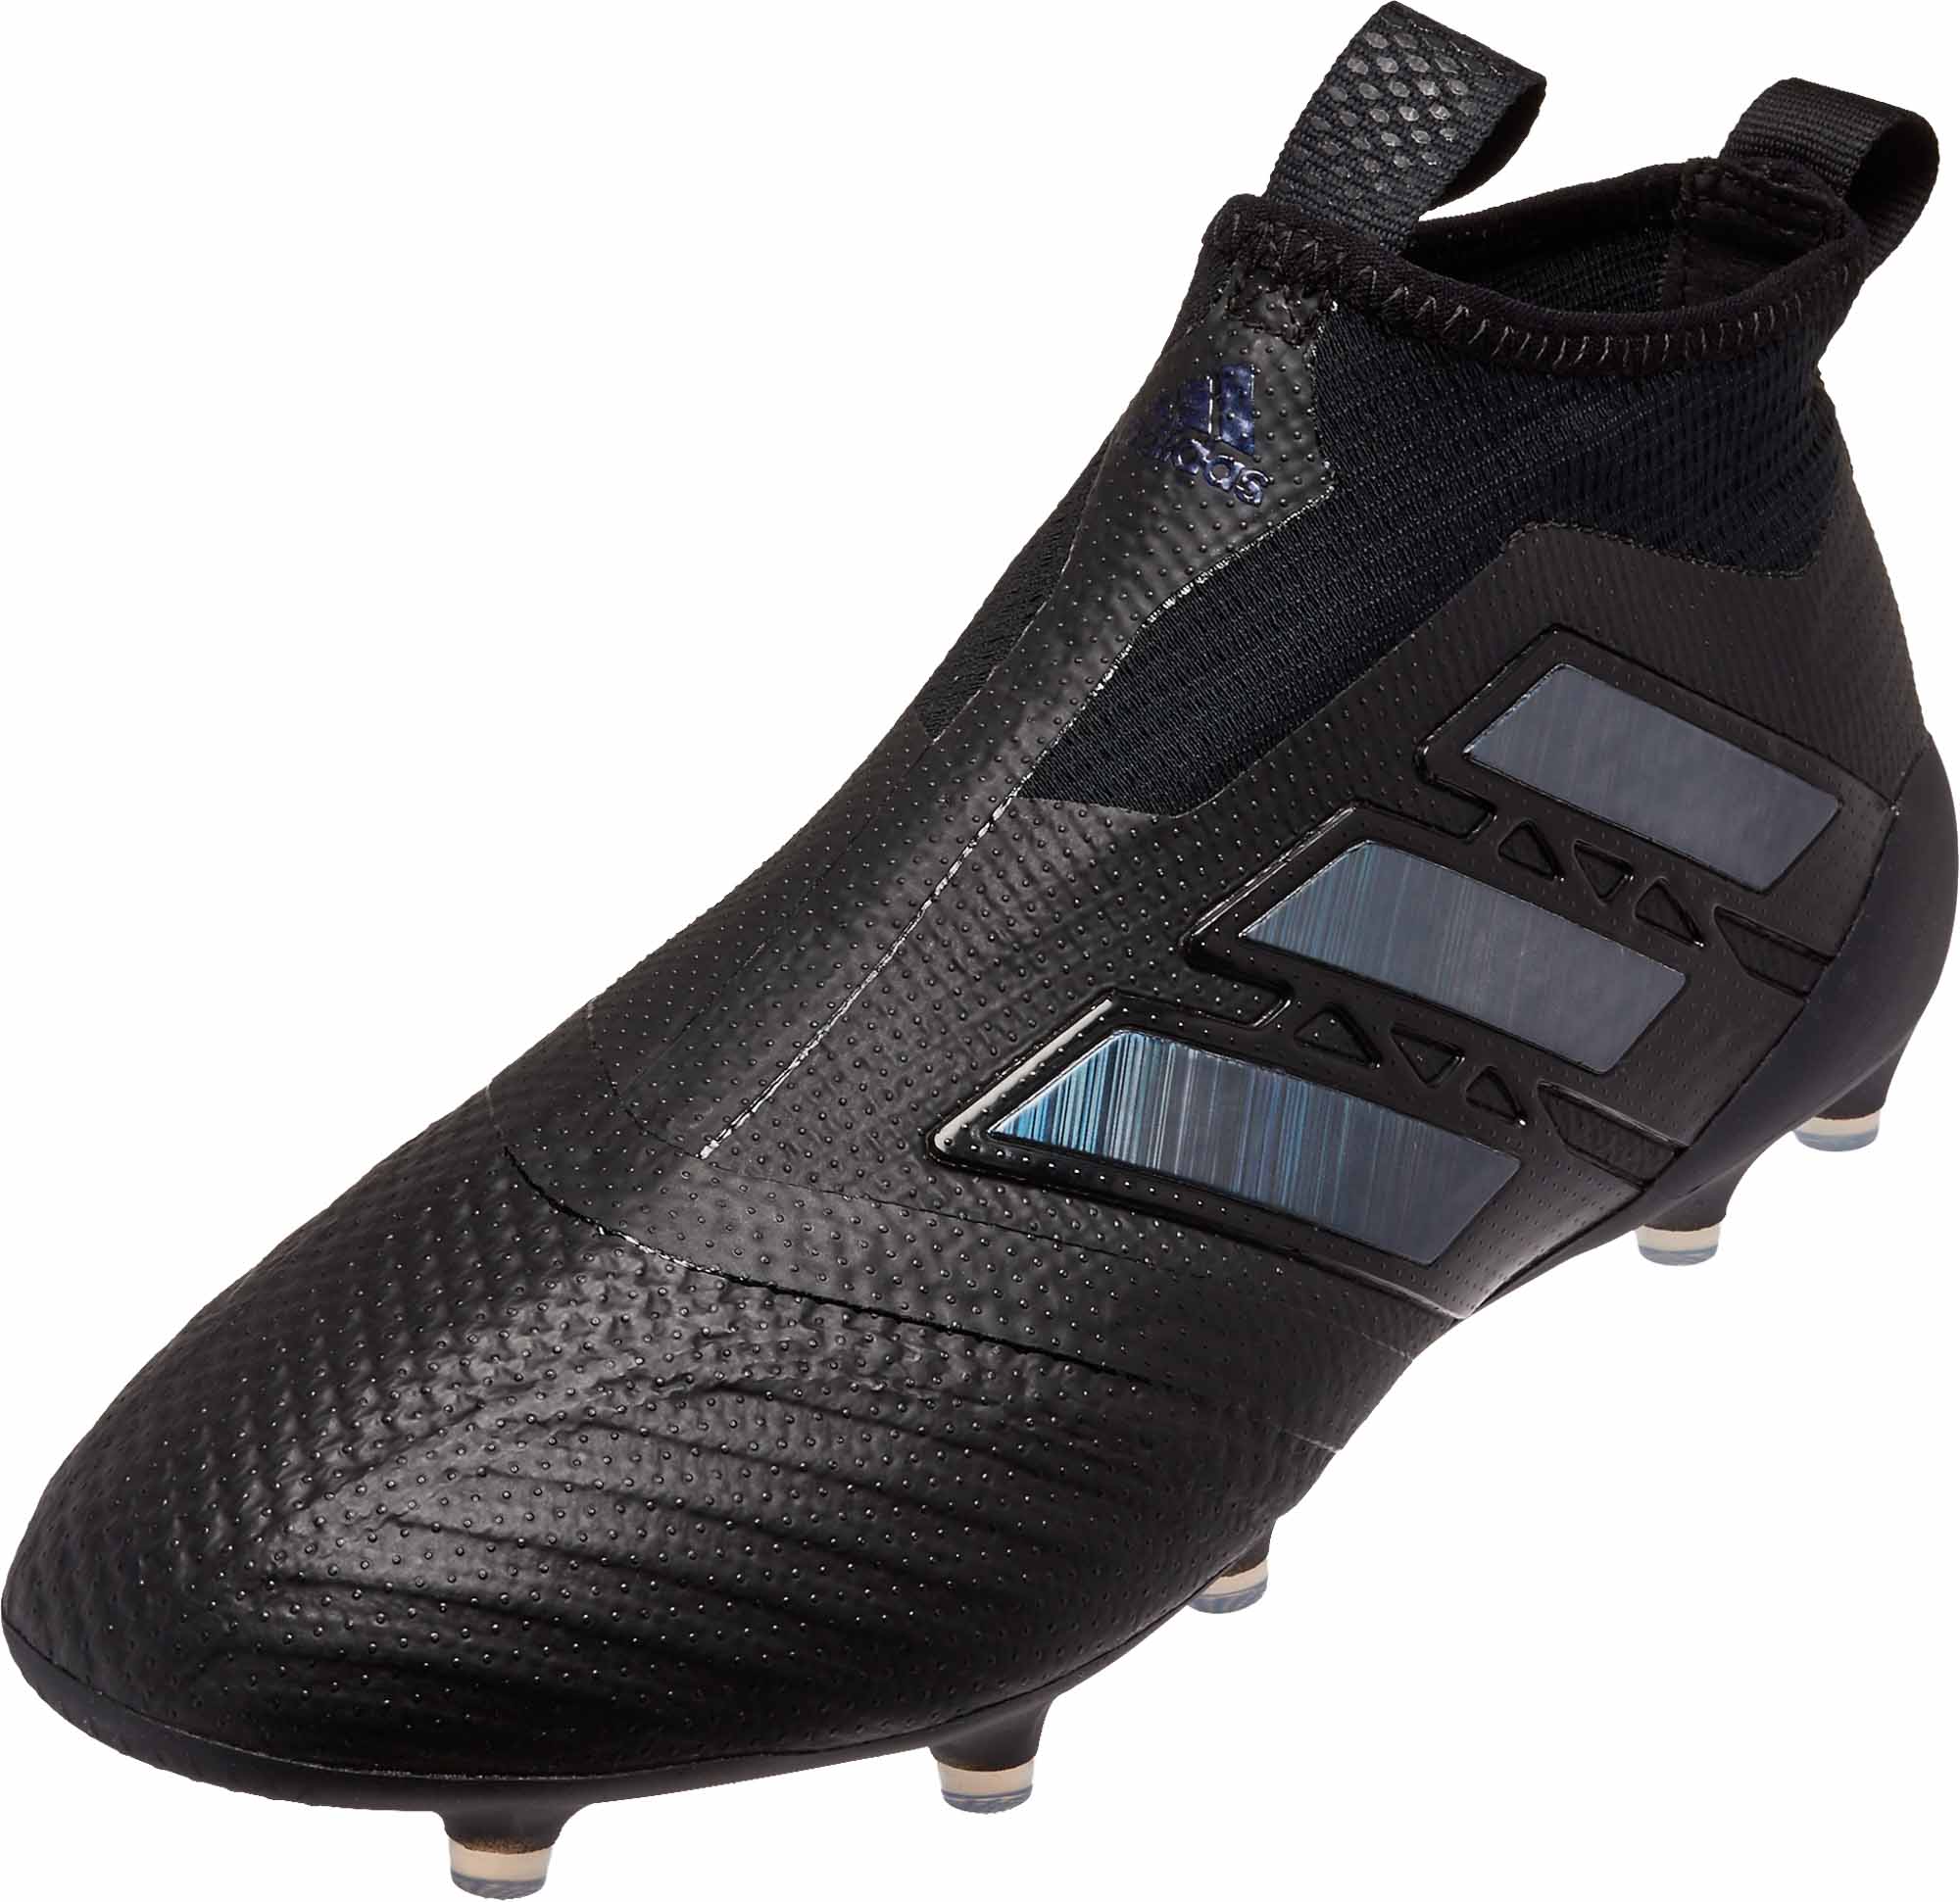 ace soccer shoes